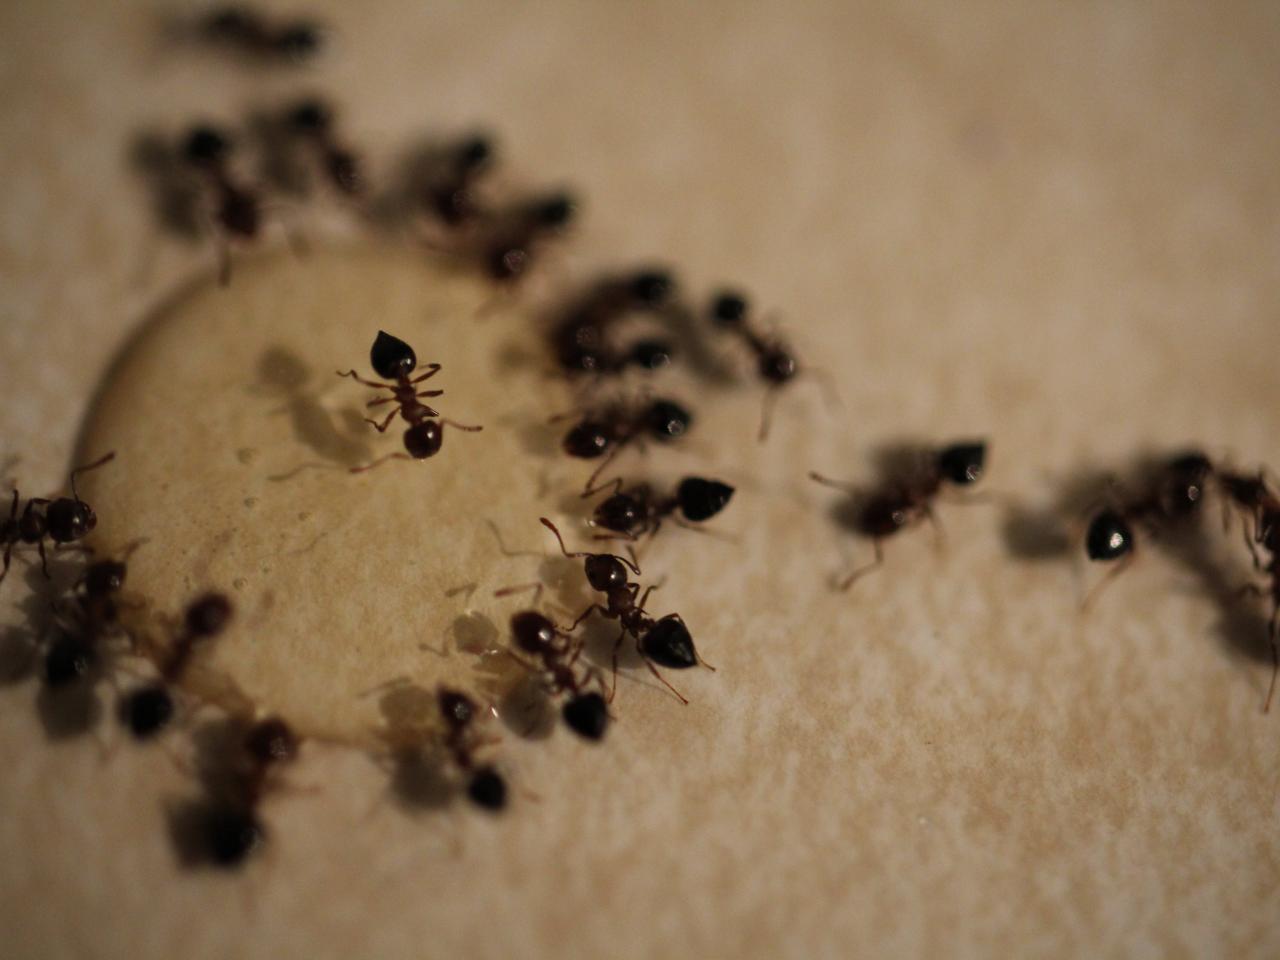 Ants In The Living Room Lyrics